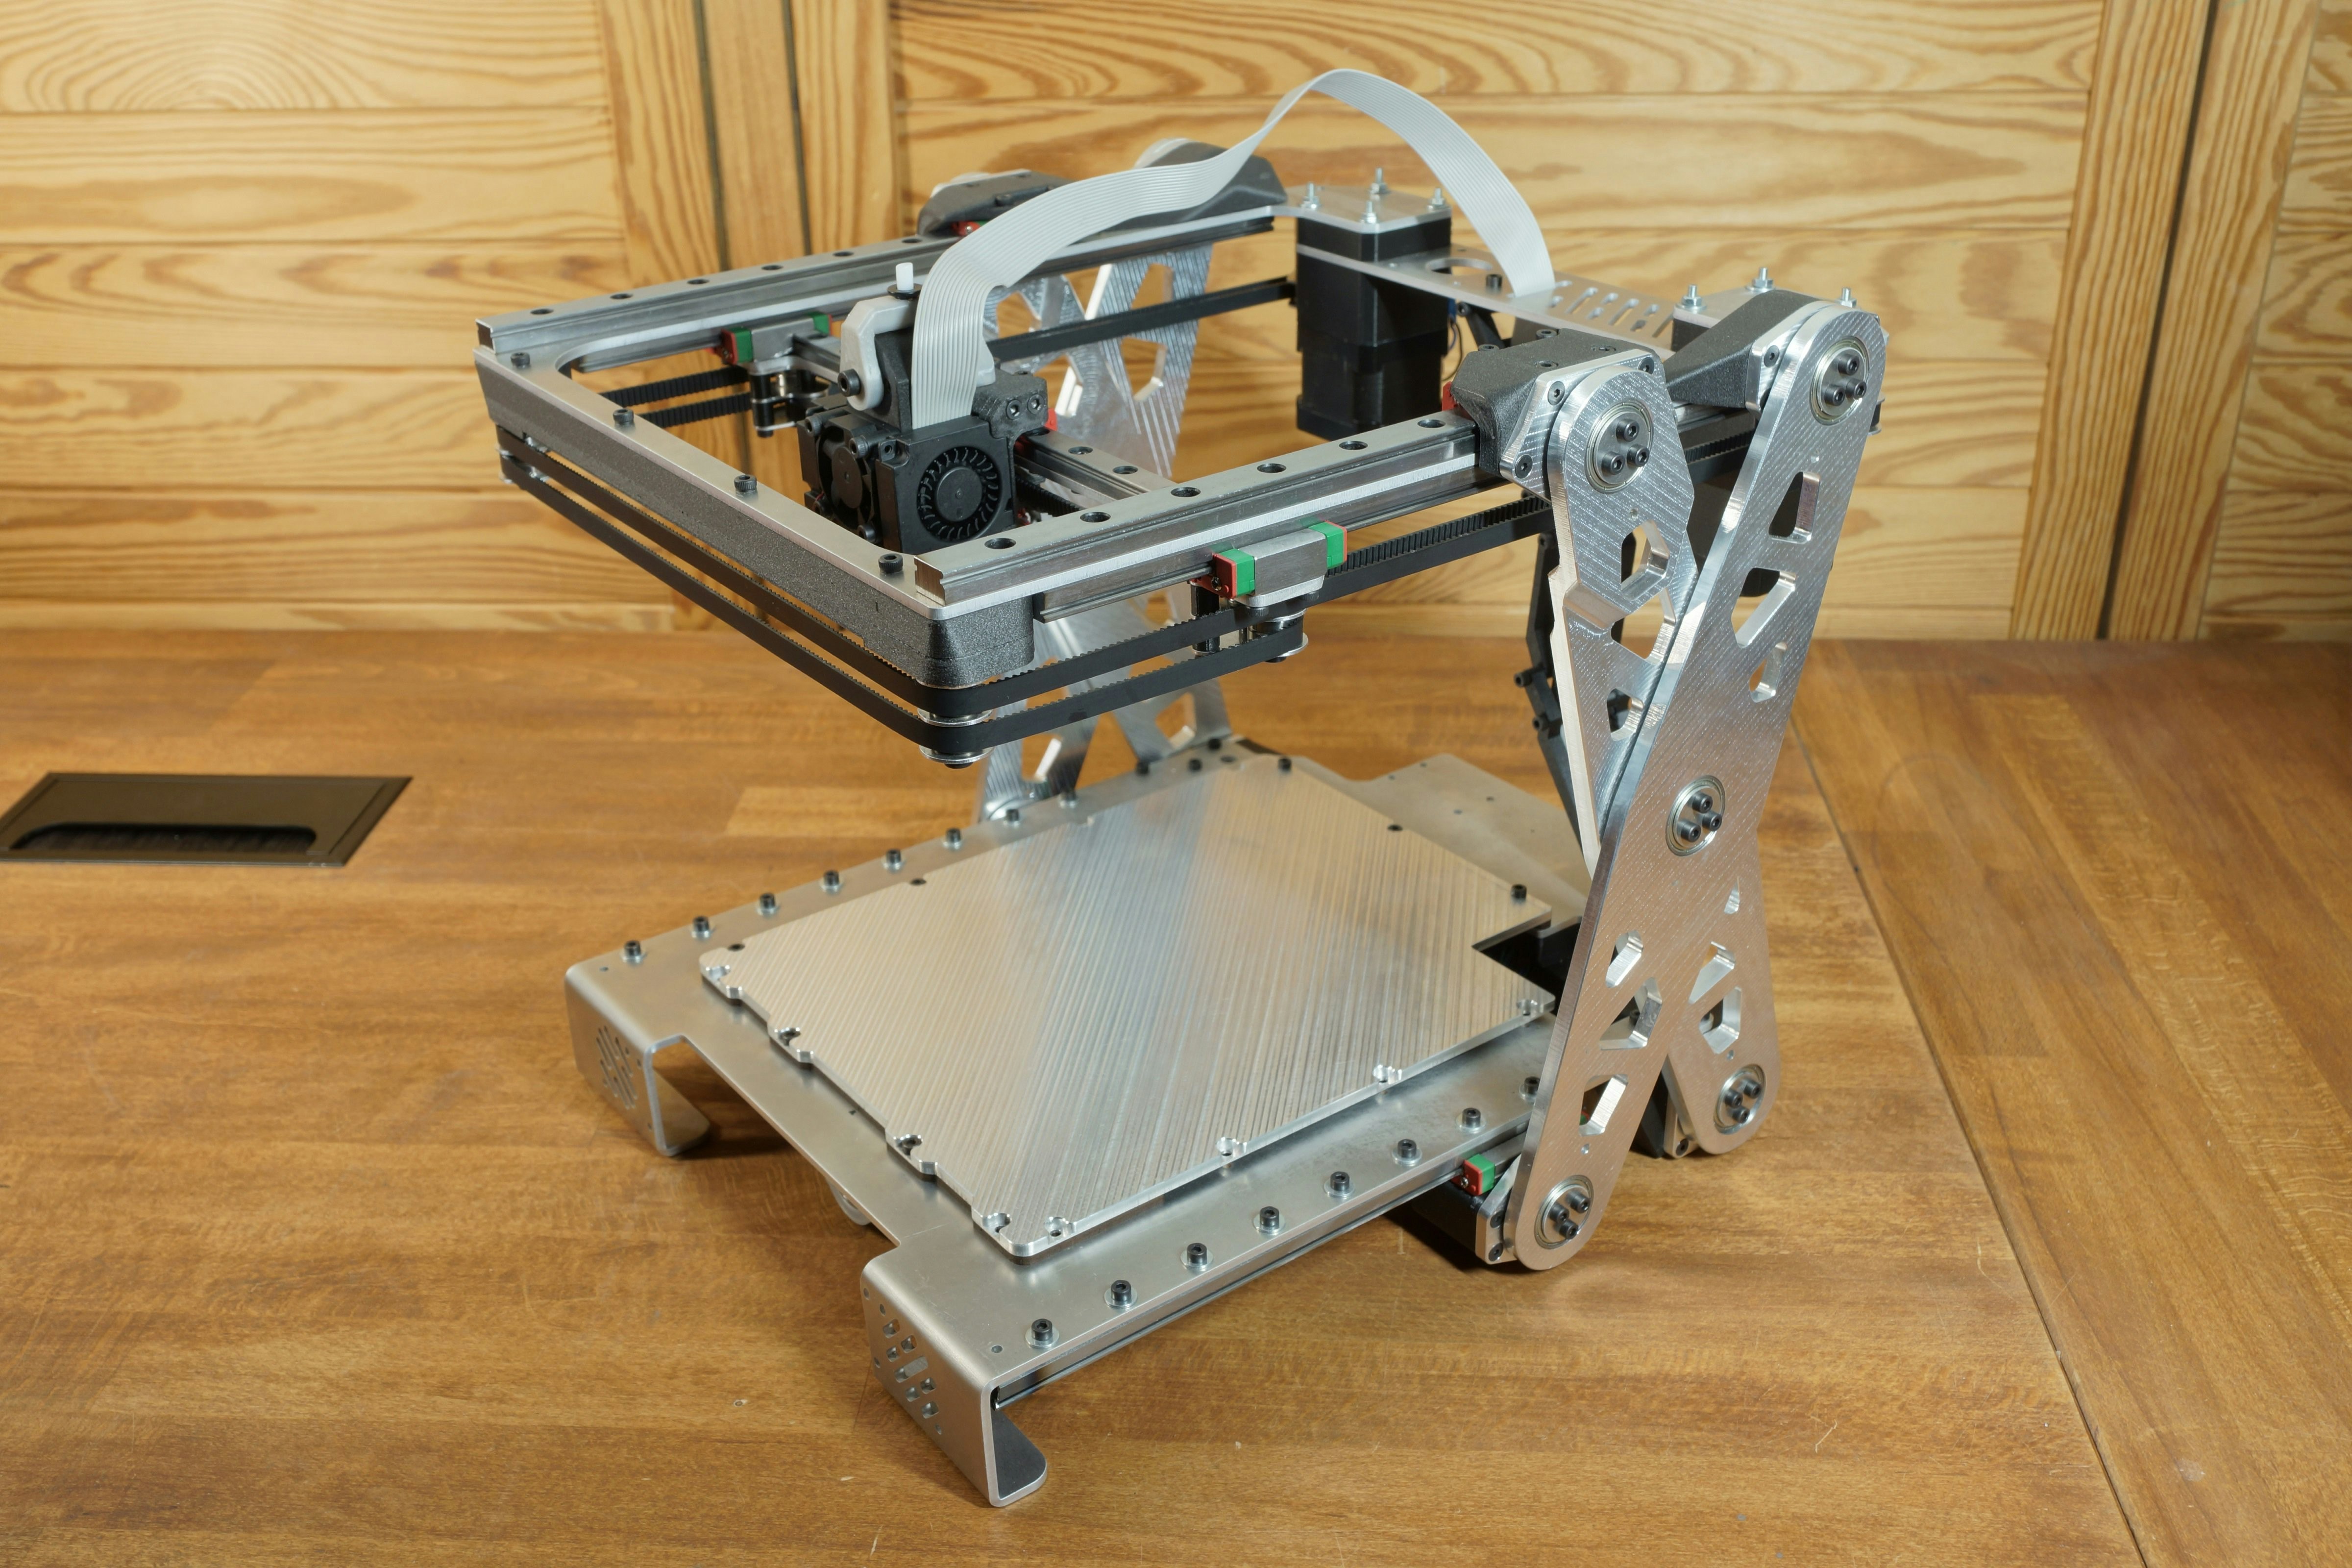 biologi presse Hammer This Innovative 3D Printer Design Folds for Portability - Hackster.io